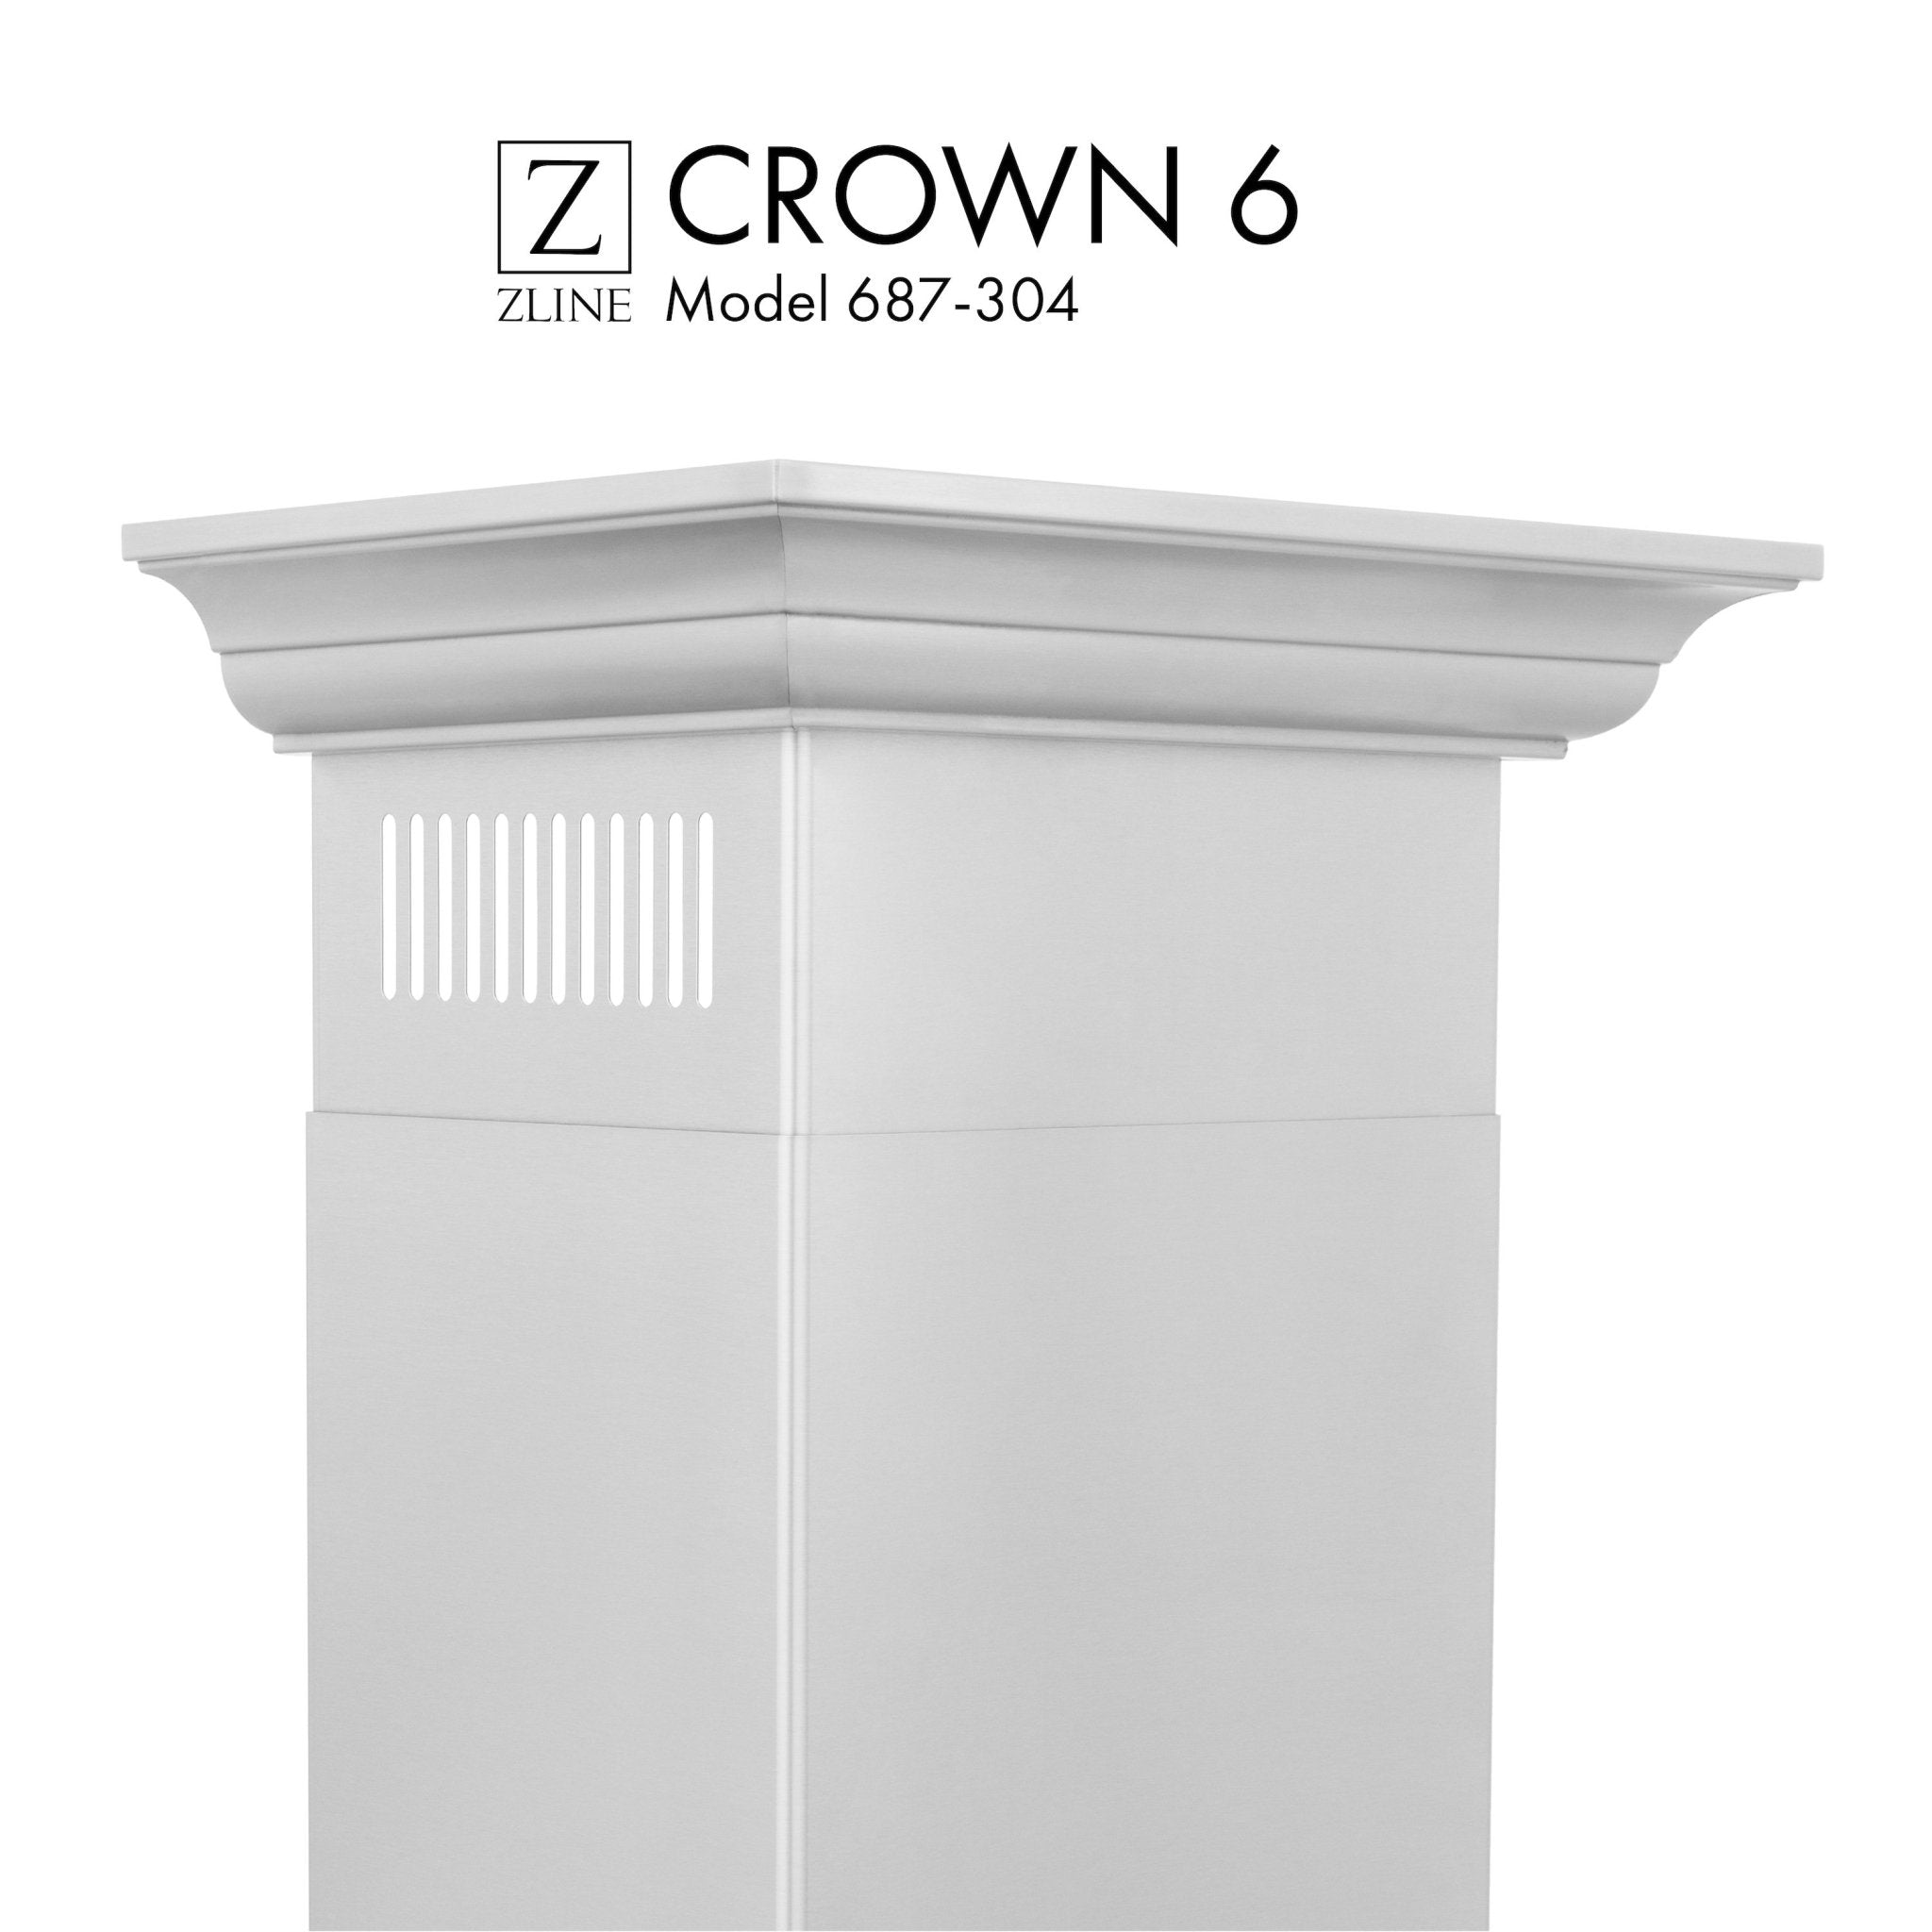 ZLINE Crown Molding Profile 6 for Wall Mount Range Hood (CM6-687-304) - Rustic Kitchen & Bath - Range Hood Accessories - ZLINE Kitchen and Bath